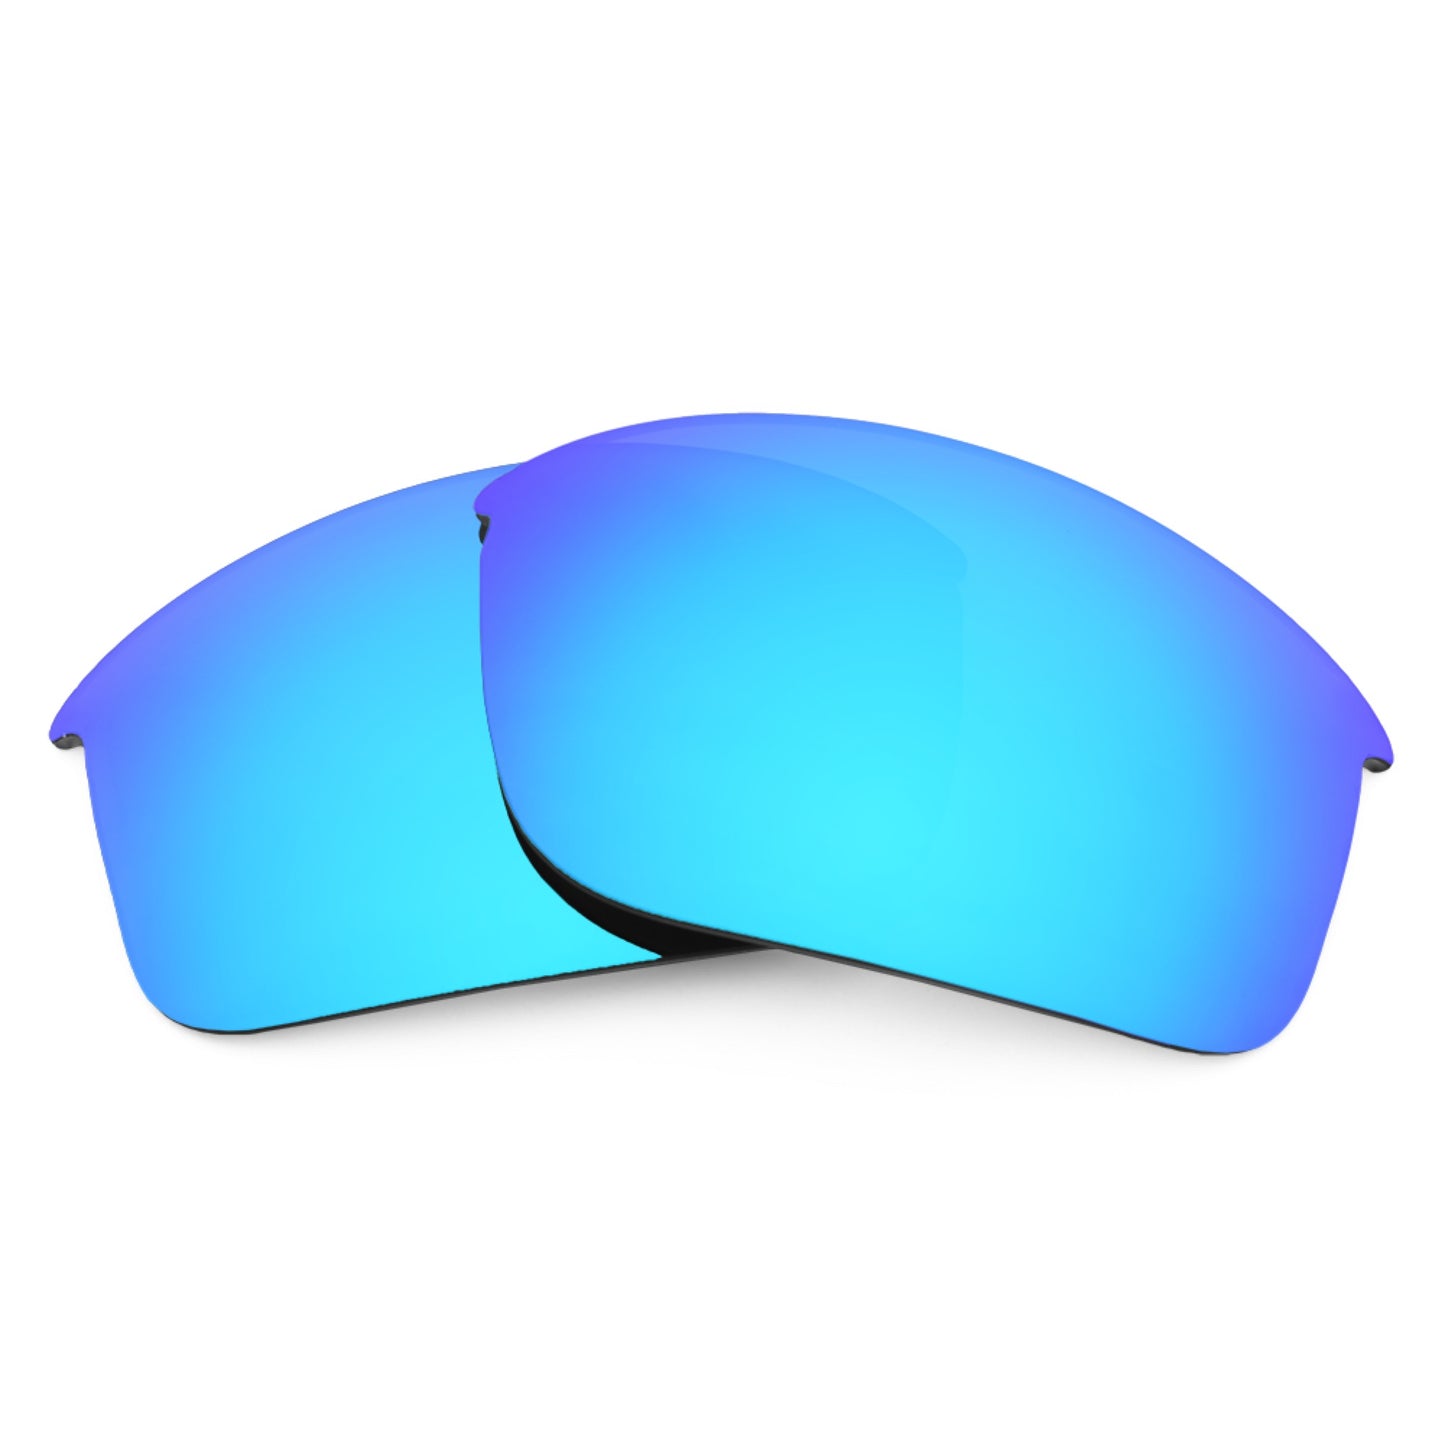 Revant replacement lenses for Costa Galveston Non-Polarized Ice Blue